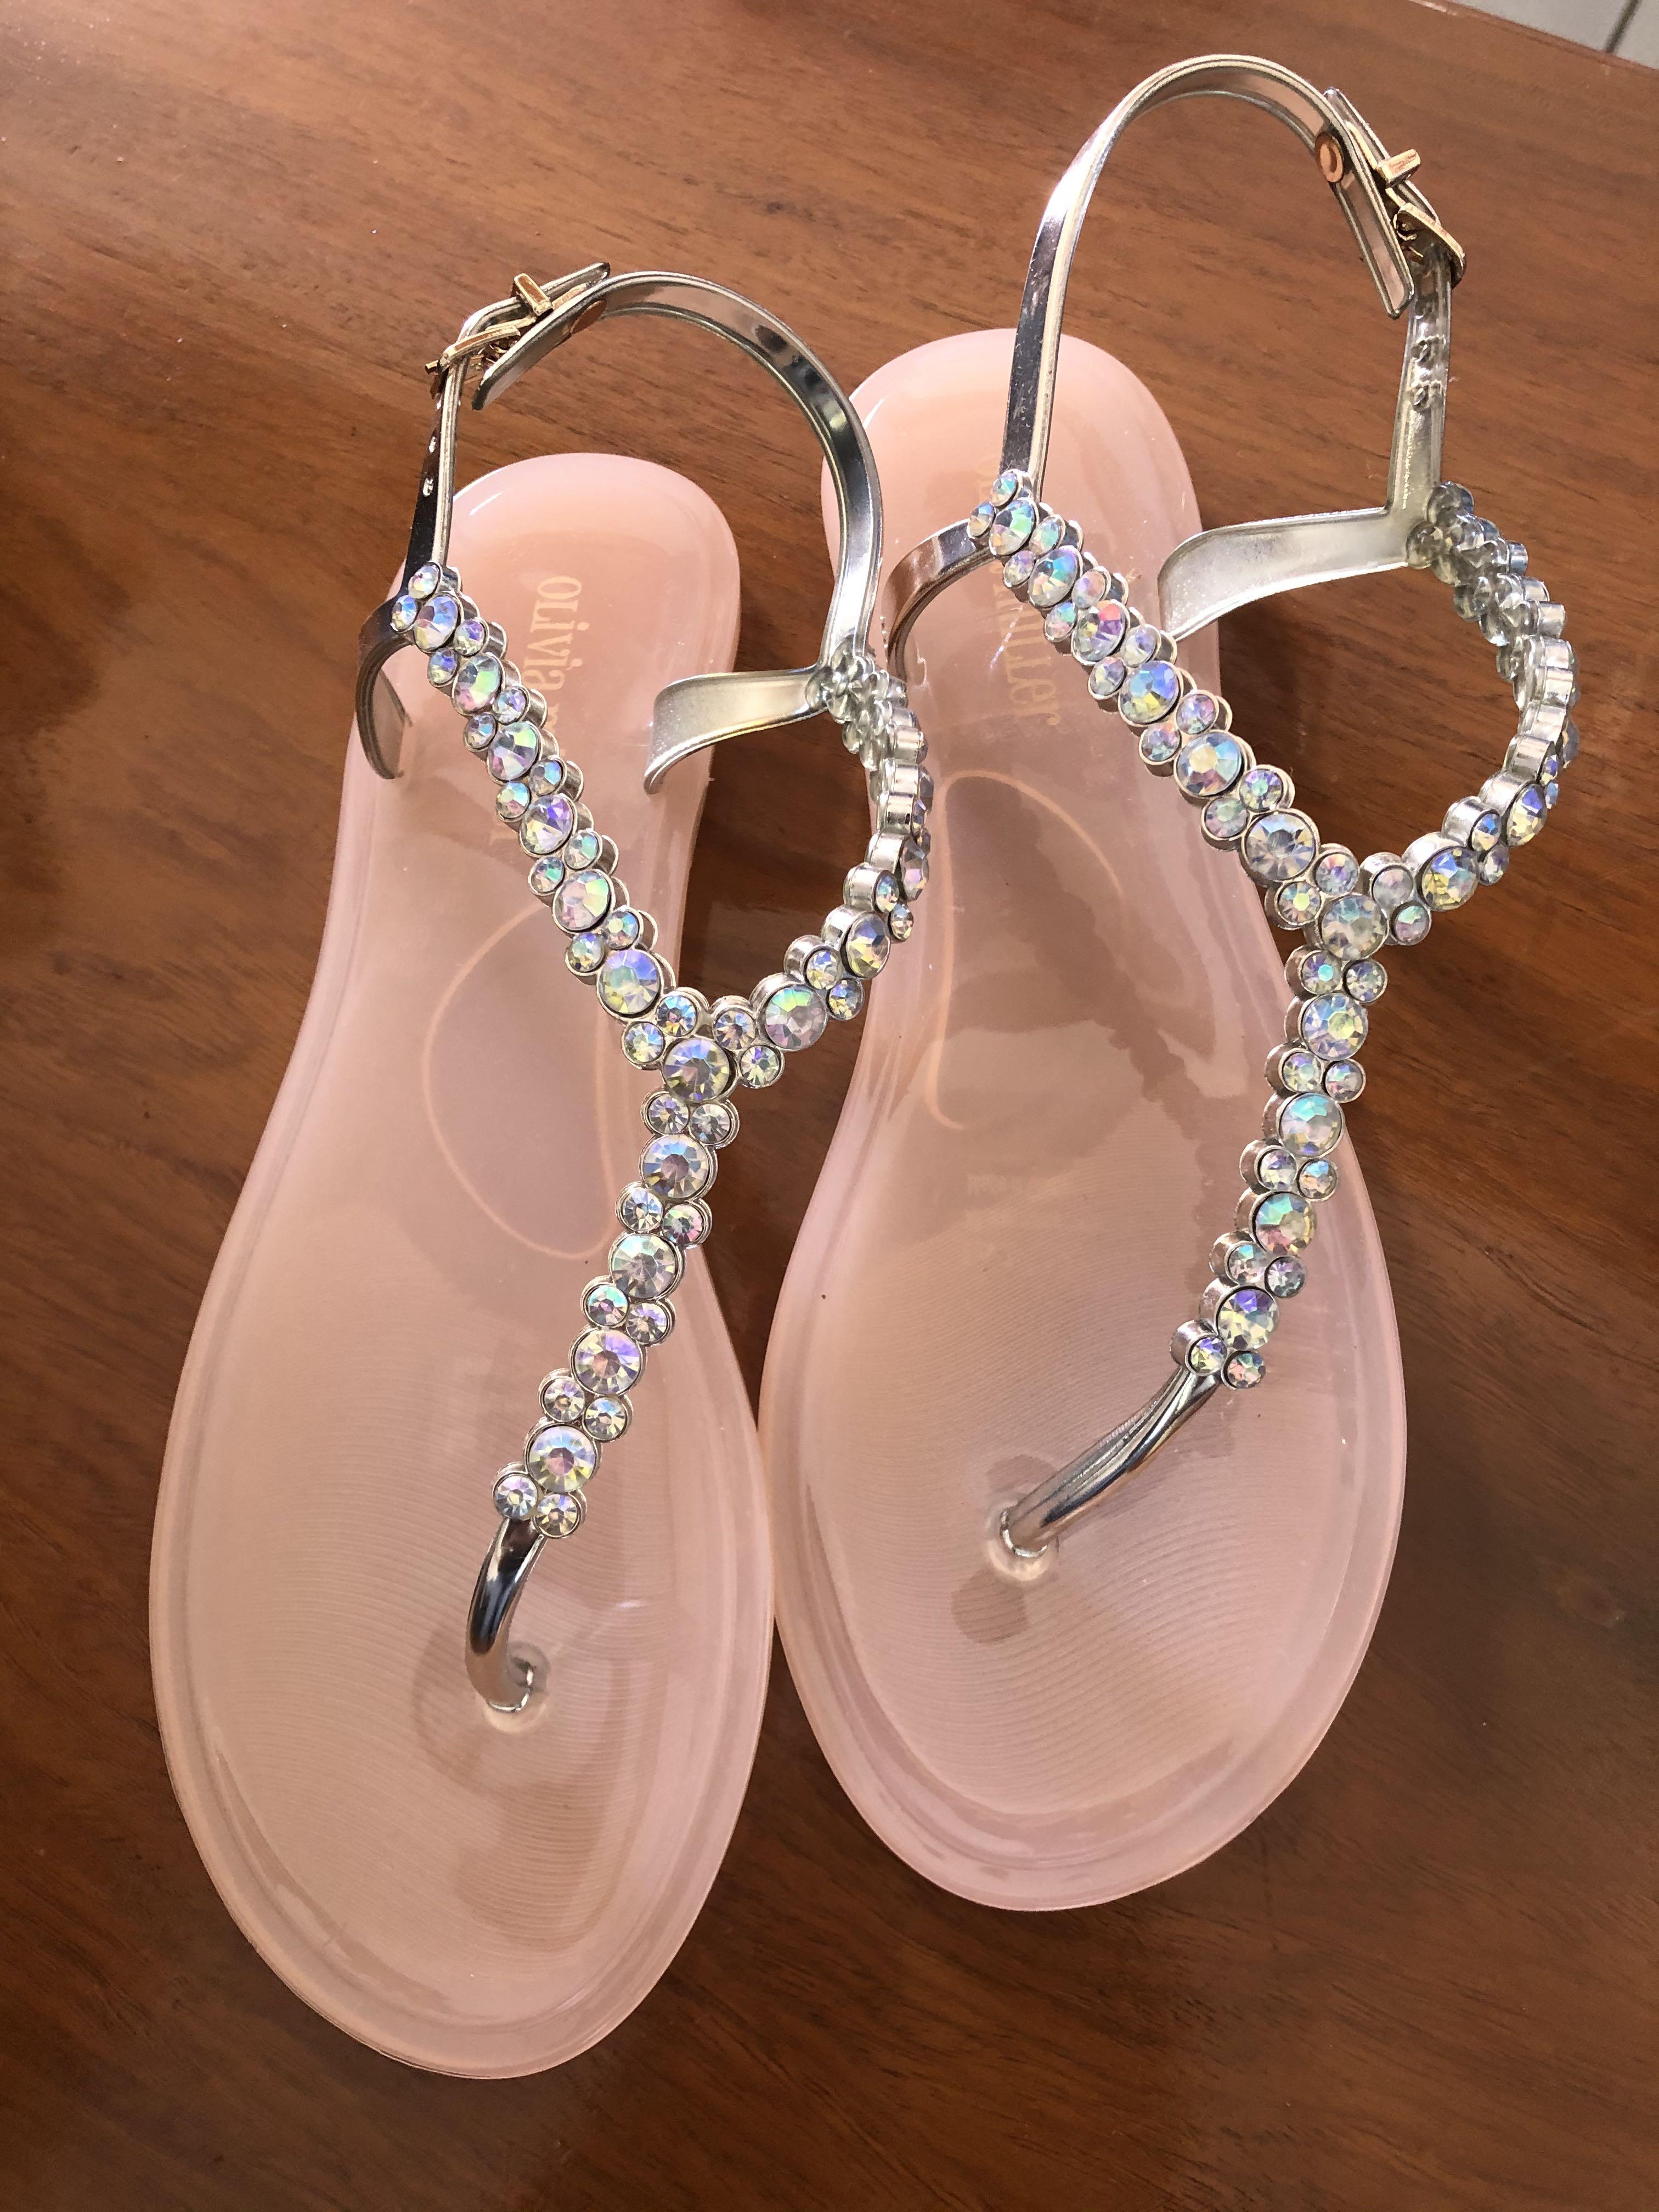 olivia miller jelly sandals